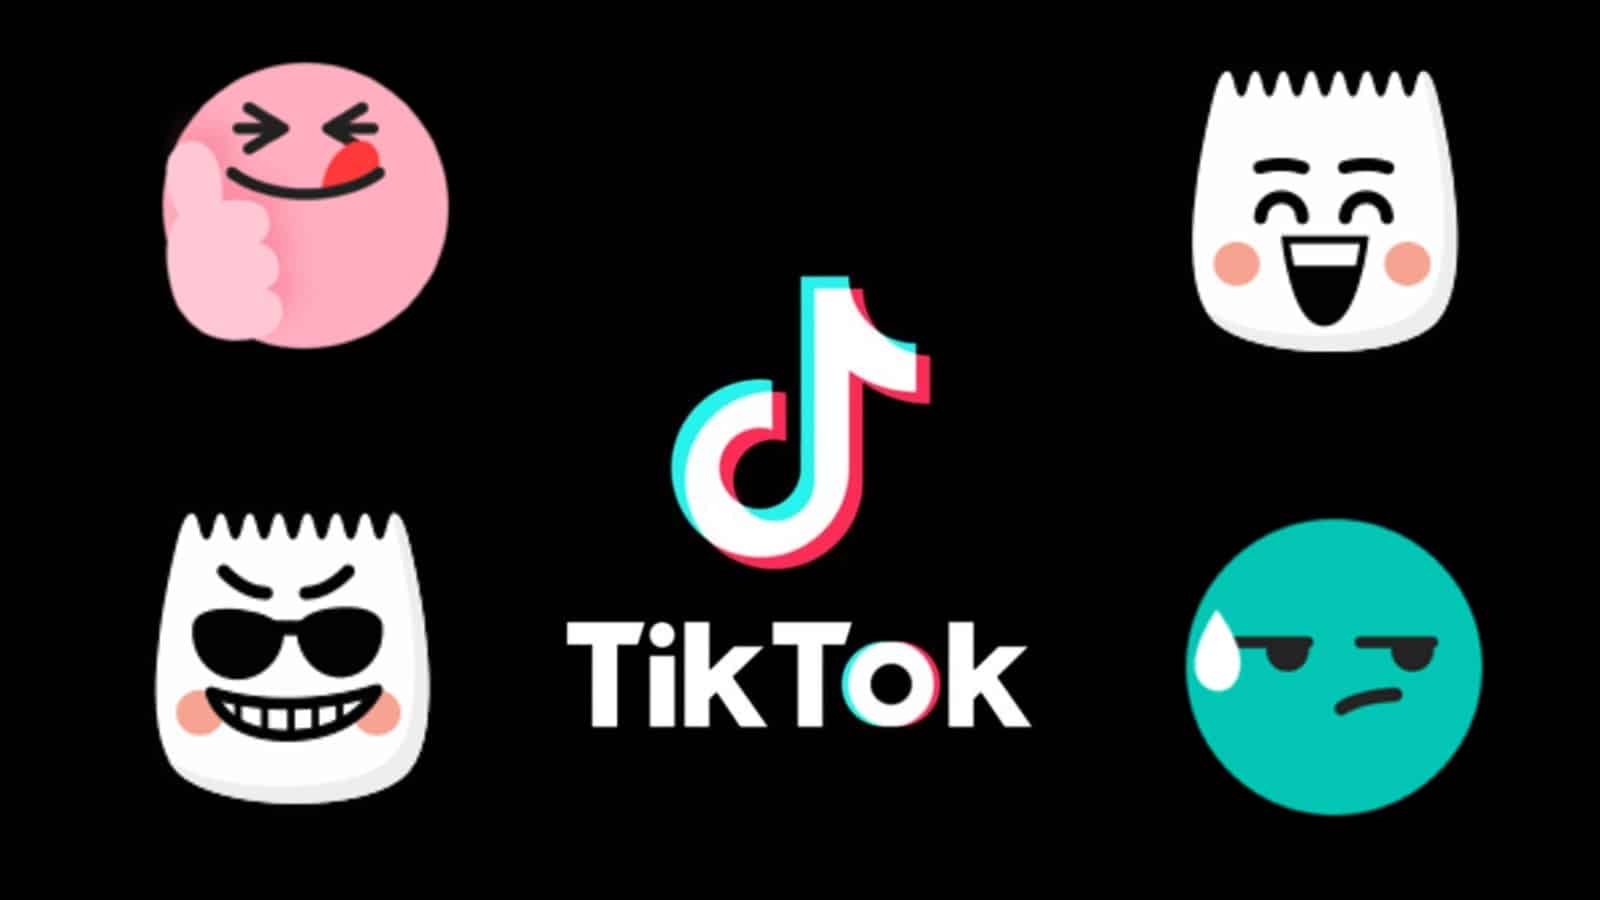 How to get TikTok secret emojis: All emoji codes